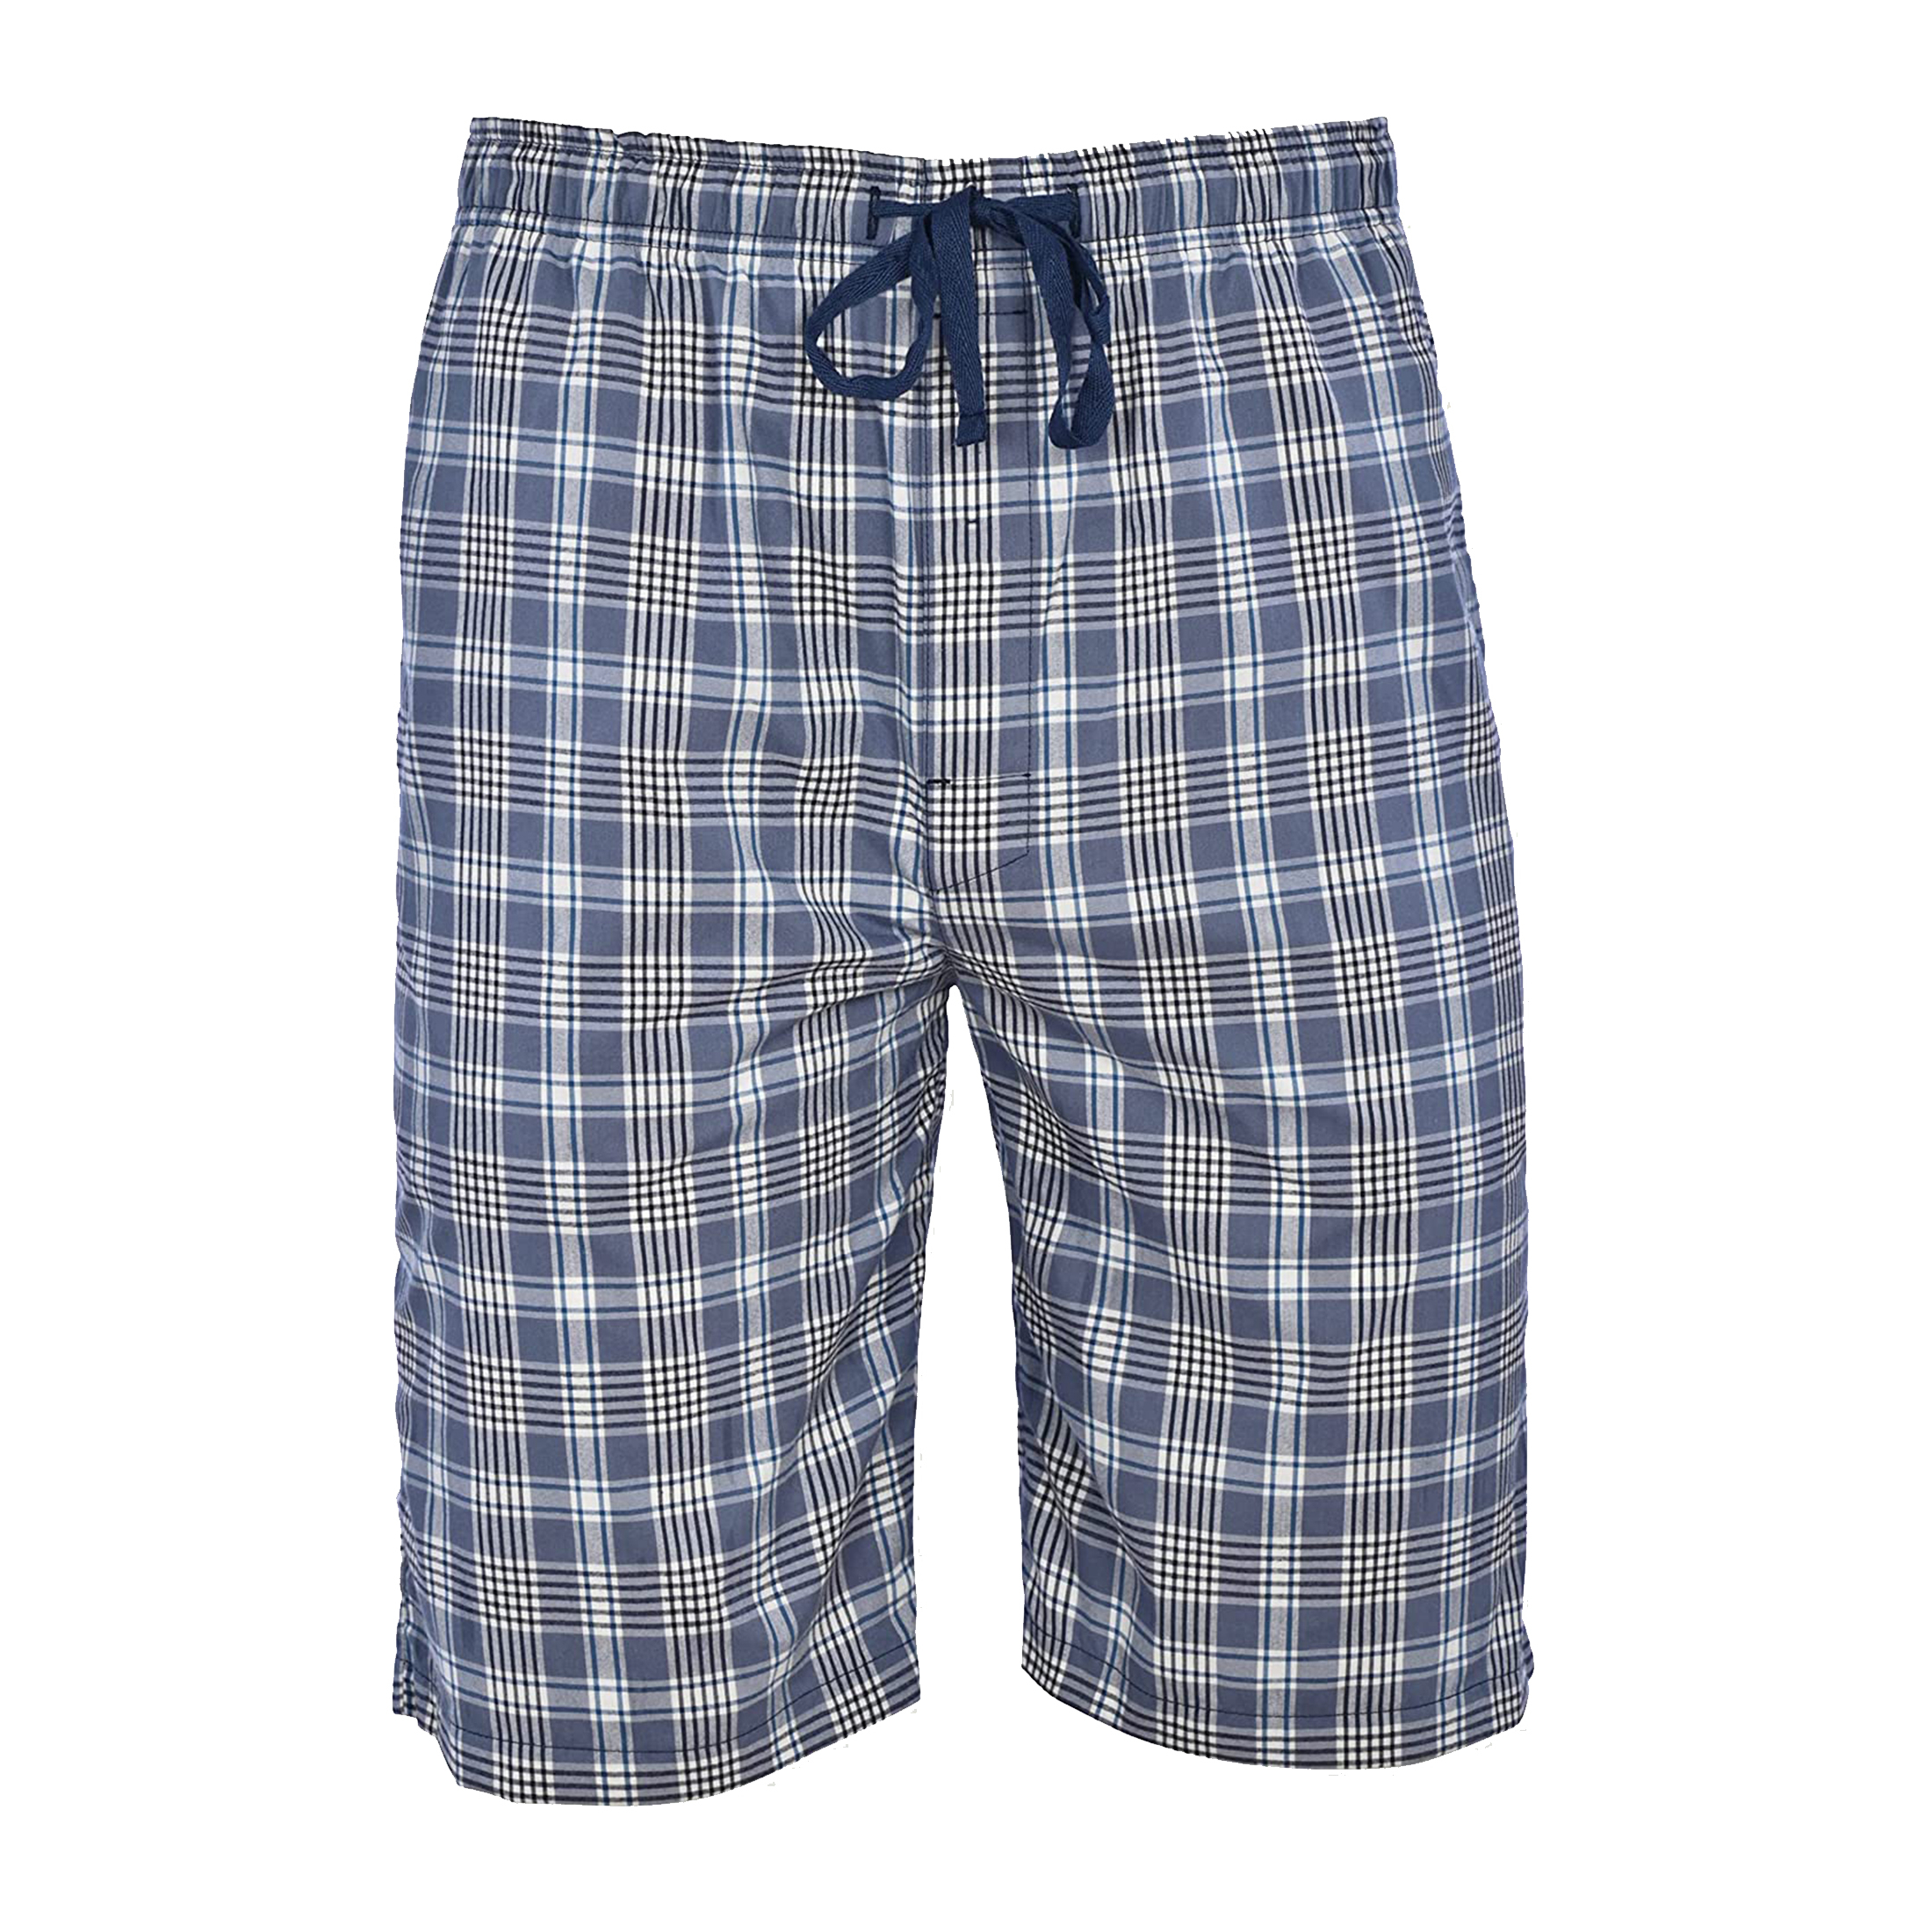 Multi-Pack: Men's Ultra-Soft Jersey Knit Sleep Lounge Pajama Shorts For Sleepwear - Plaid, 3 Pack, Small